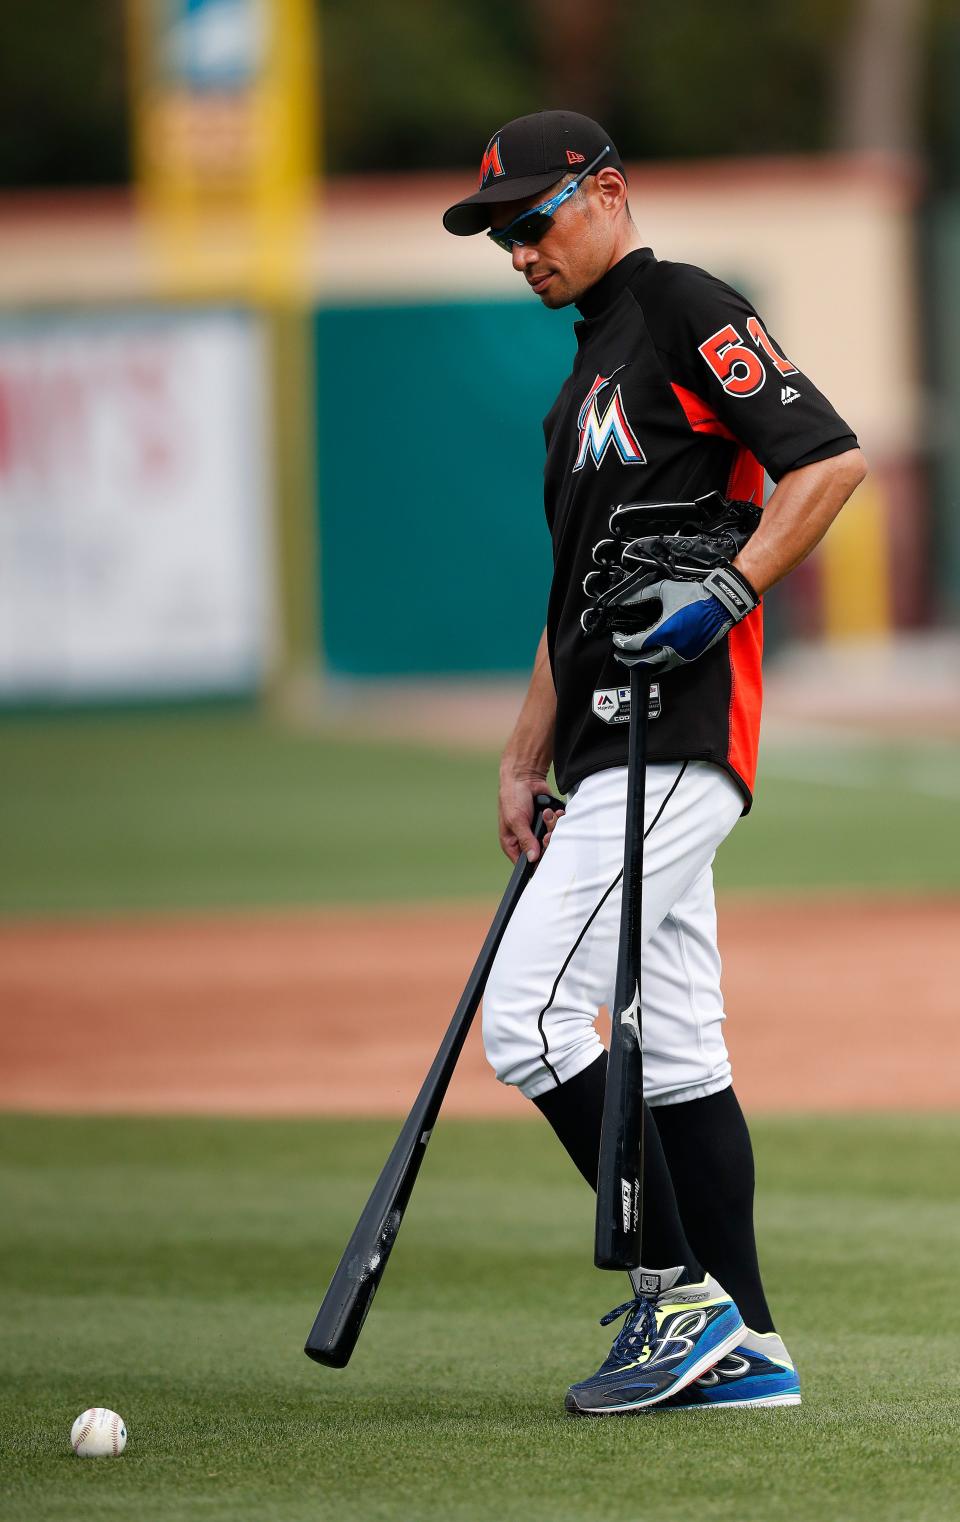 Marlins rightfielder Ichiro Suzuki picks up batting practice balls before a spring training game against the Tigers on Friday, March 31, 2017 in Jupiter, Fla.